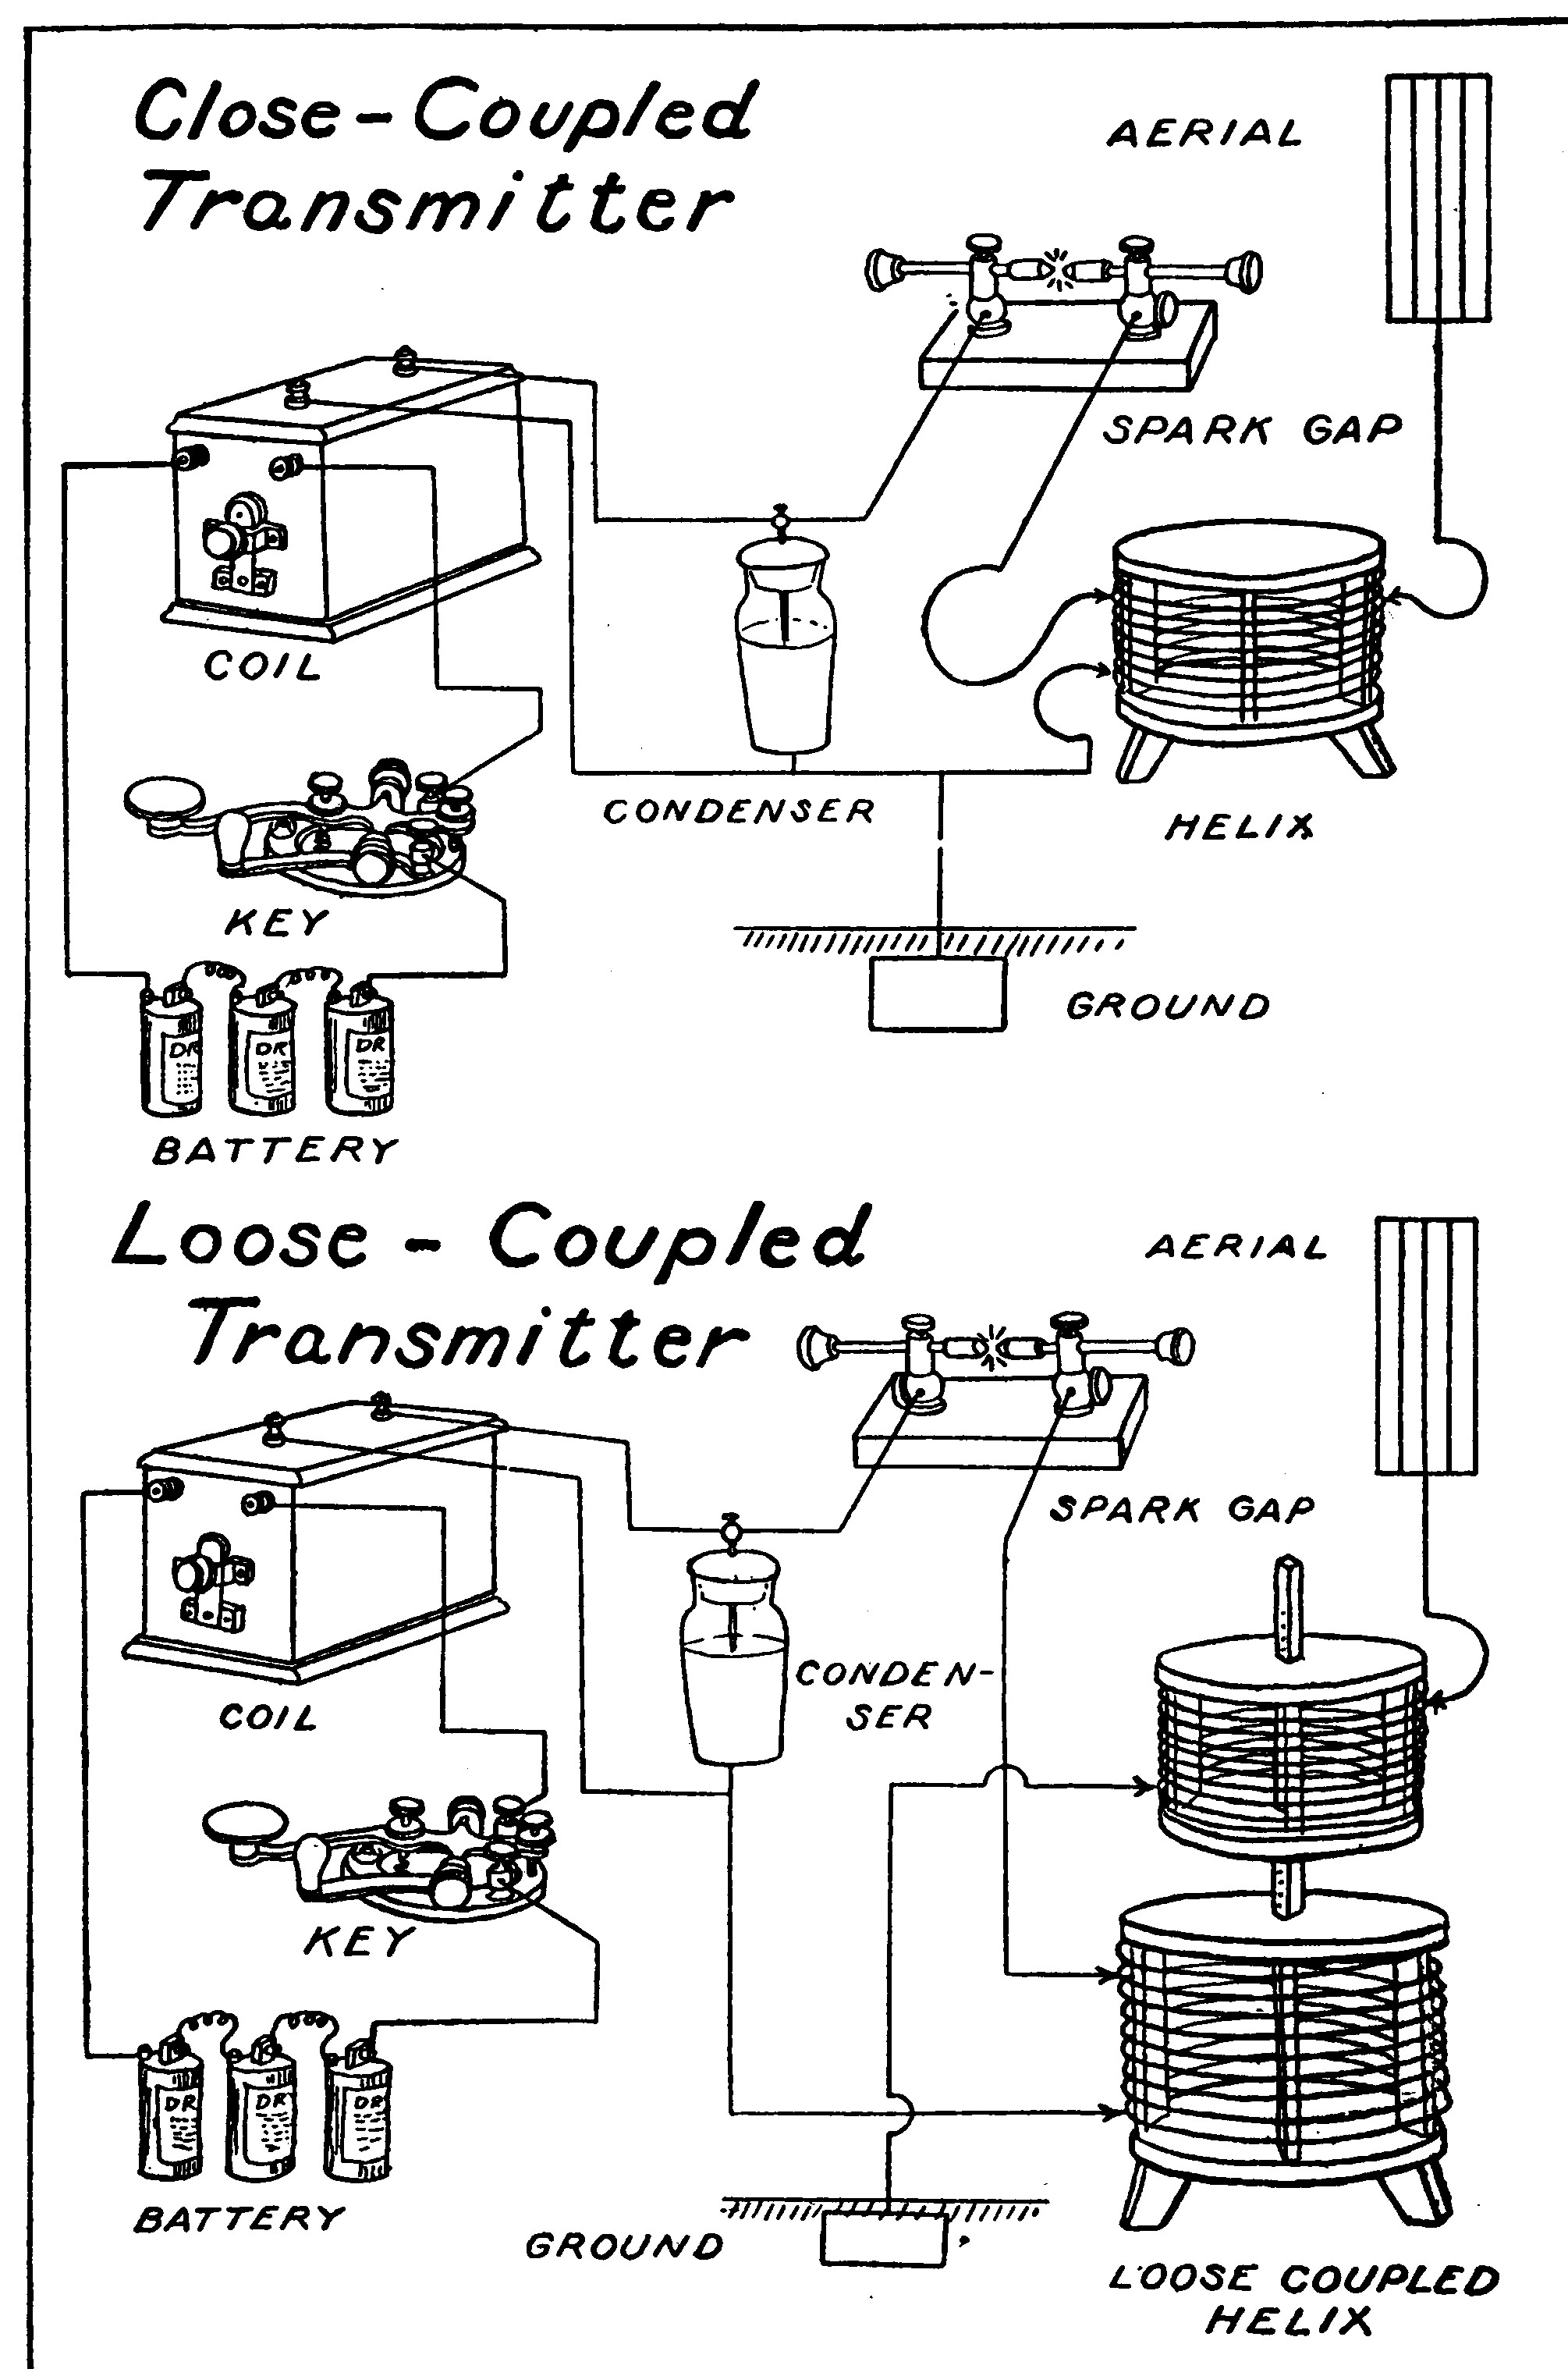 Close-Coupled Transmitter vs. Loose-Coupled Transmitter